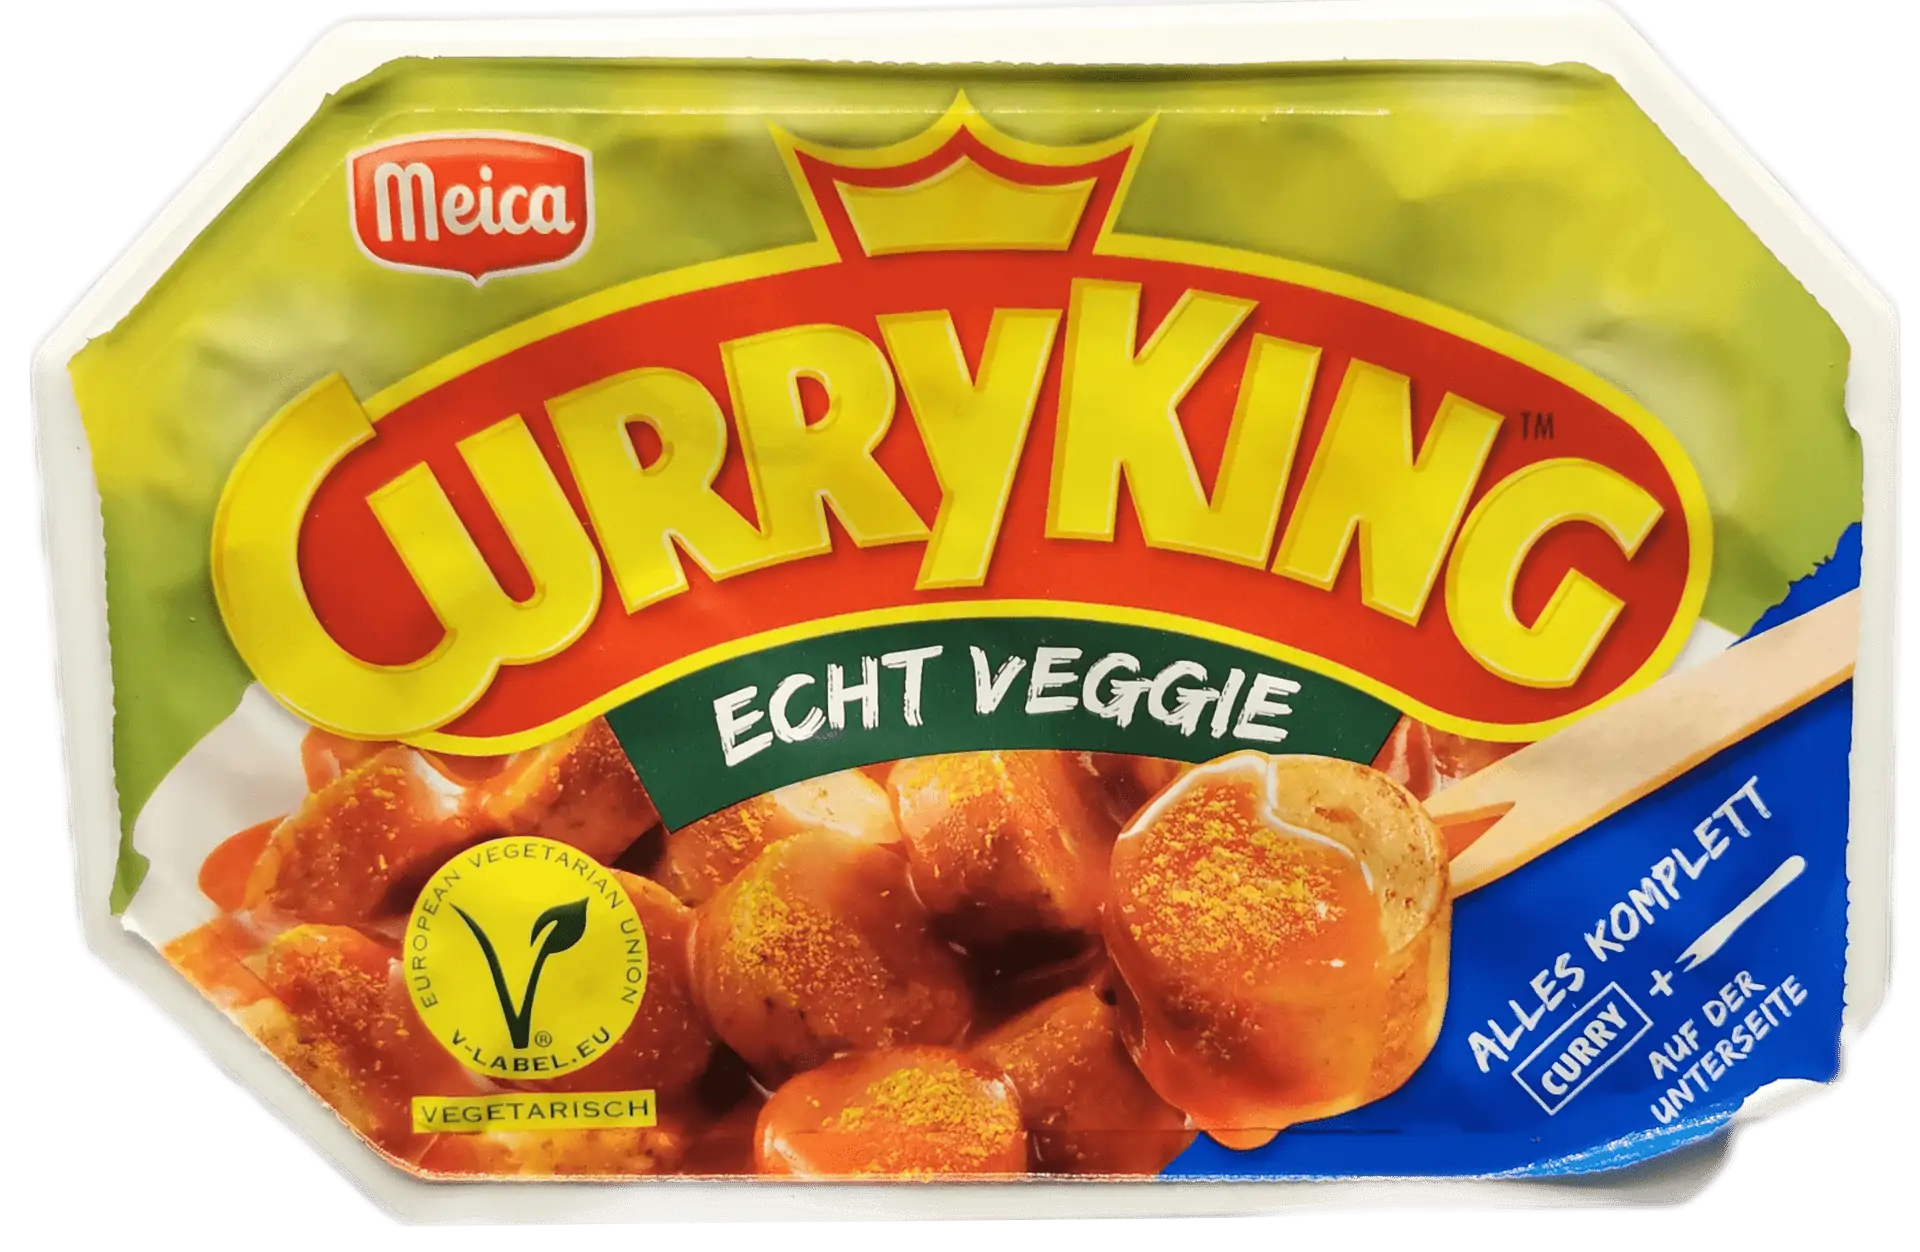 Meica - Curry King echt Veggie